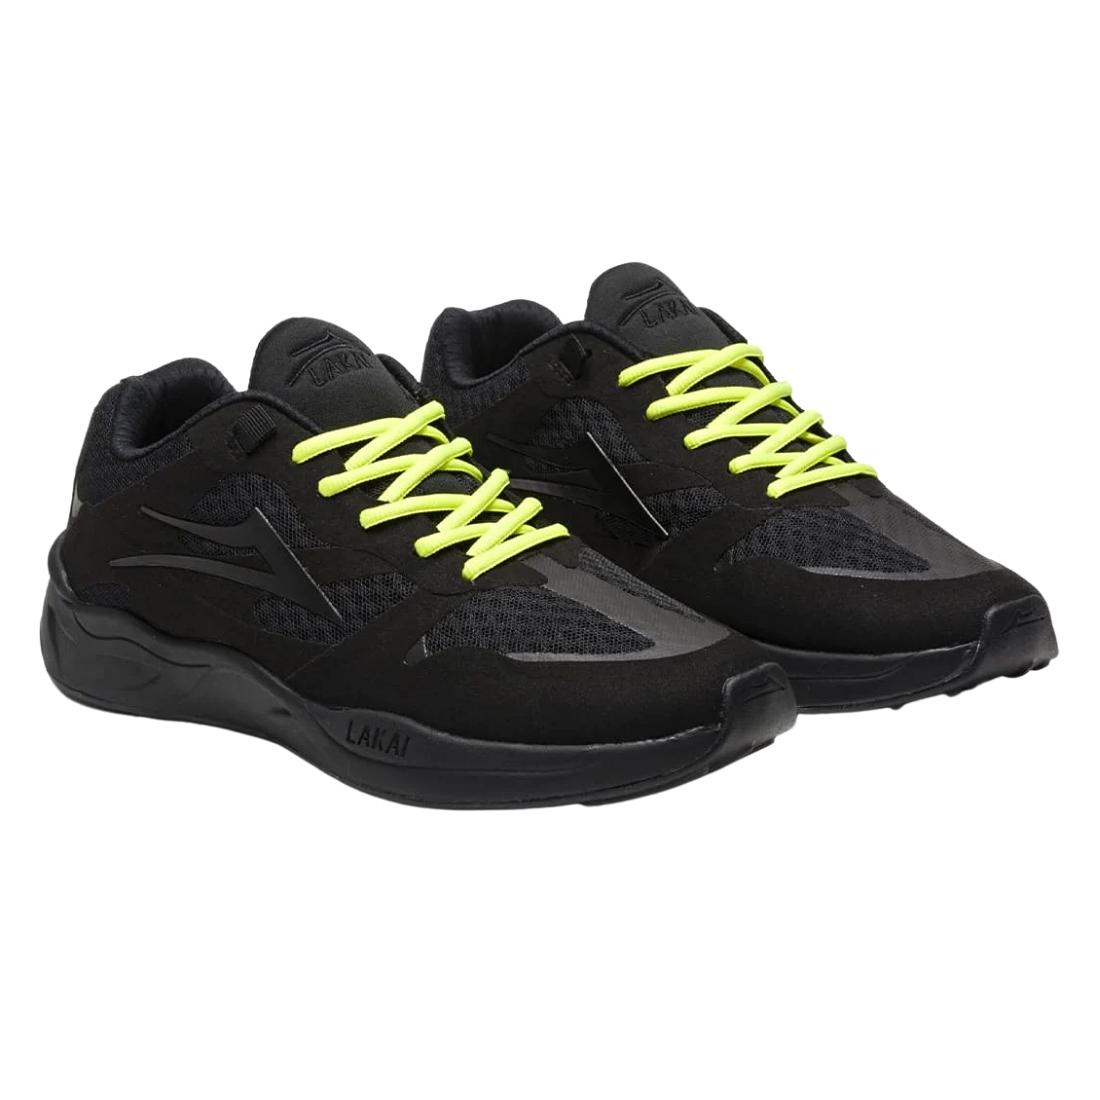 Lakai Evo 2.0 Shoes - Black Neon Green Suede - Mens Running Shoes/Trainers by Lakai